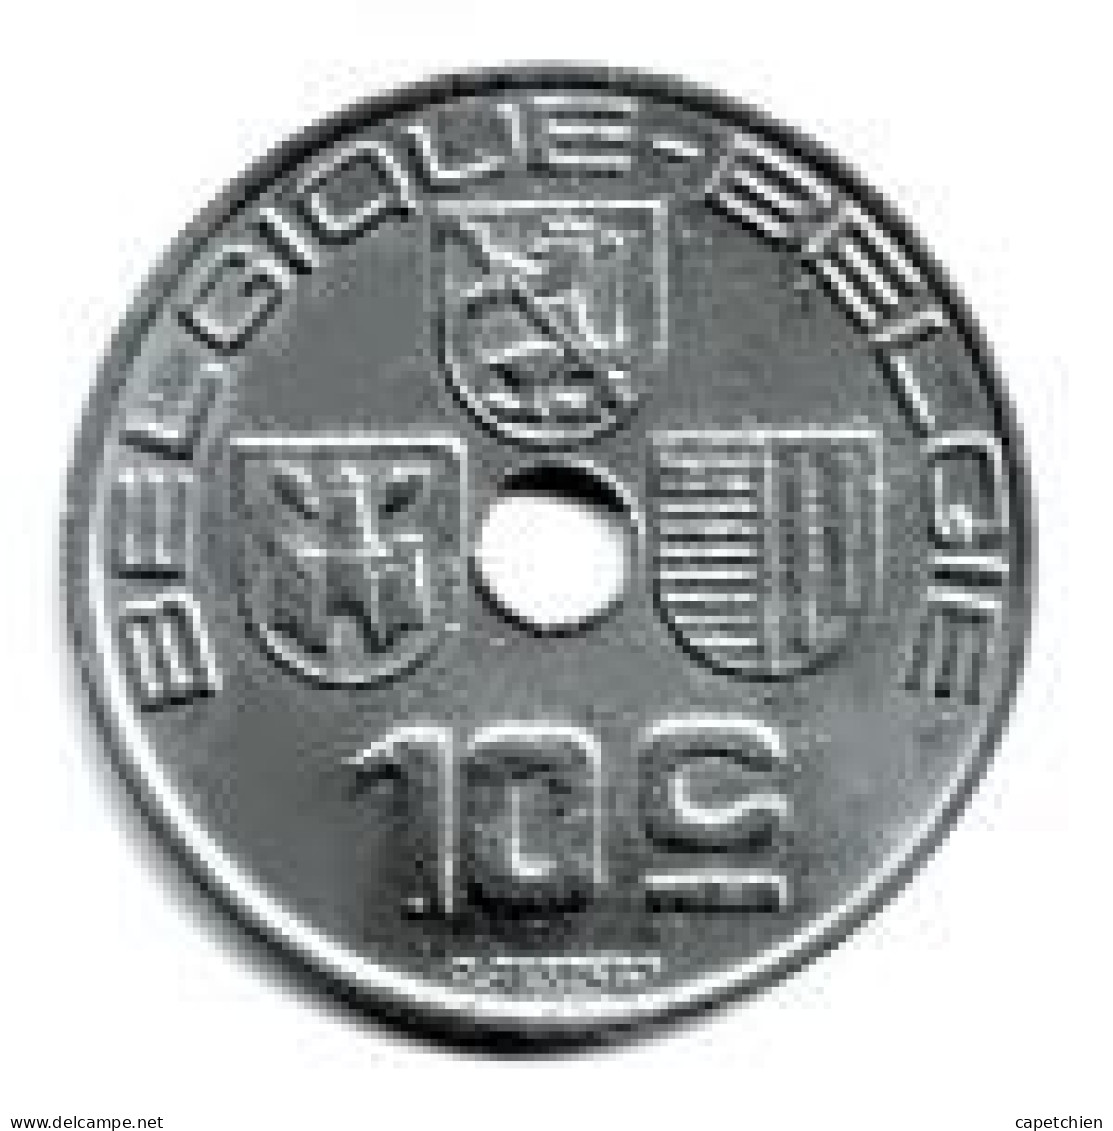 BELGIQUE / BELGIQUE - BELGIE / 10 CENTIMES  / 1939 / CUPRO NICKEL / 3.87 G / 22 Mm - 10 Cents & 25 Cents